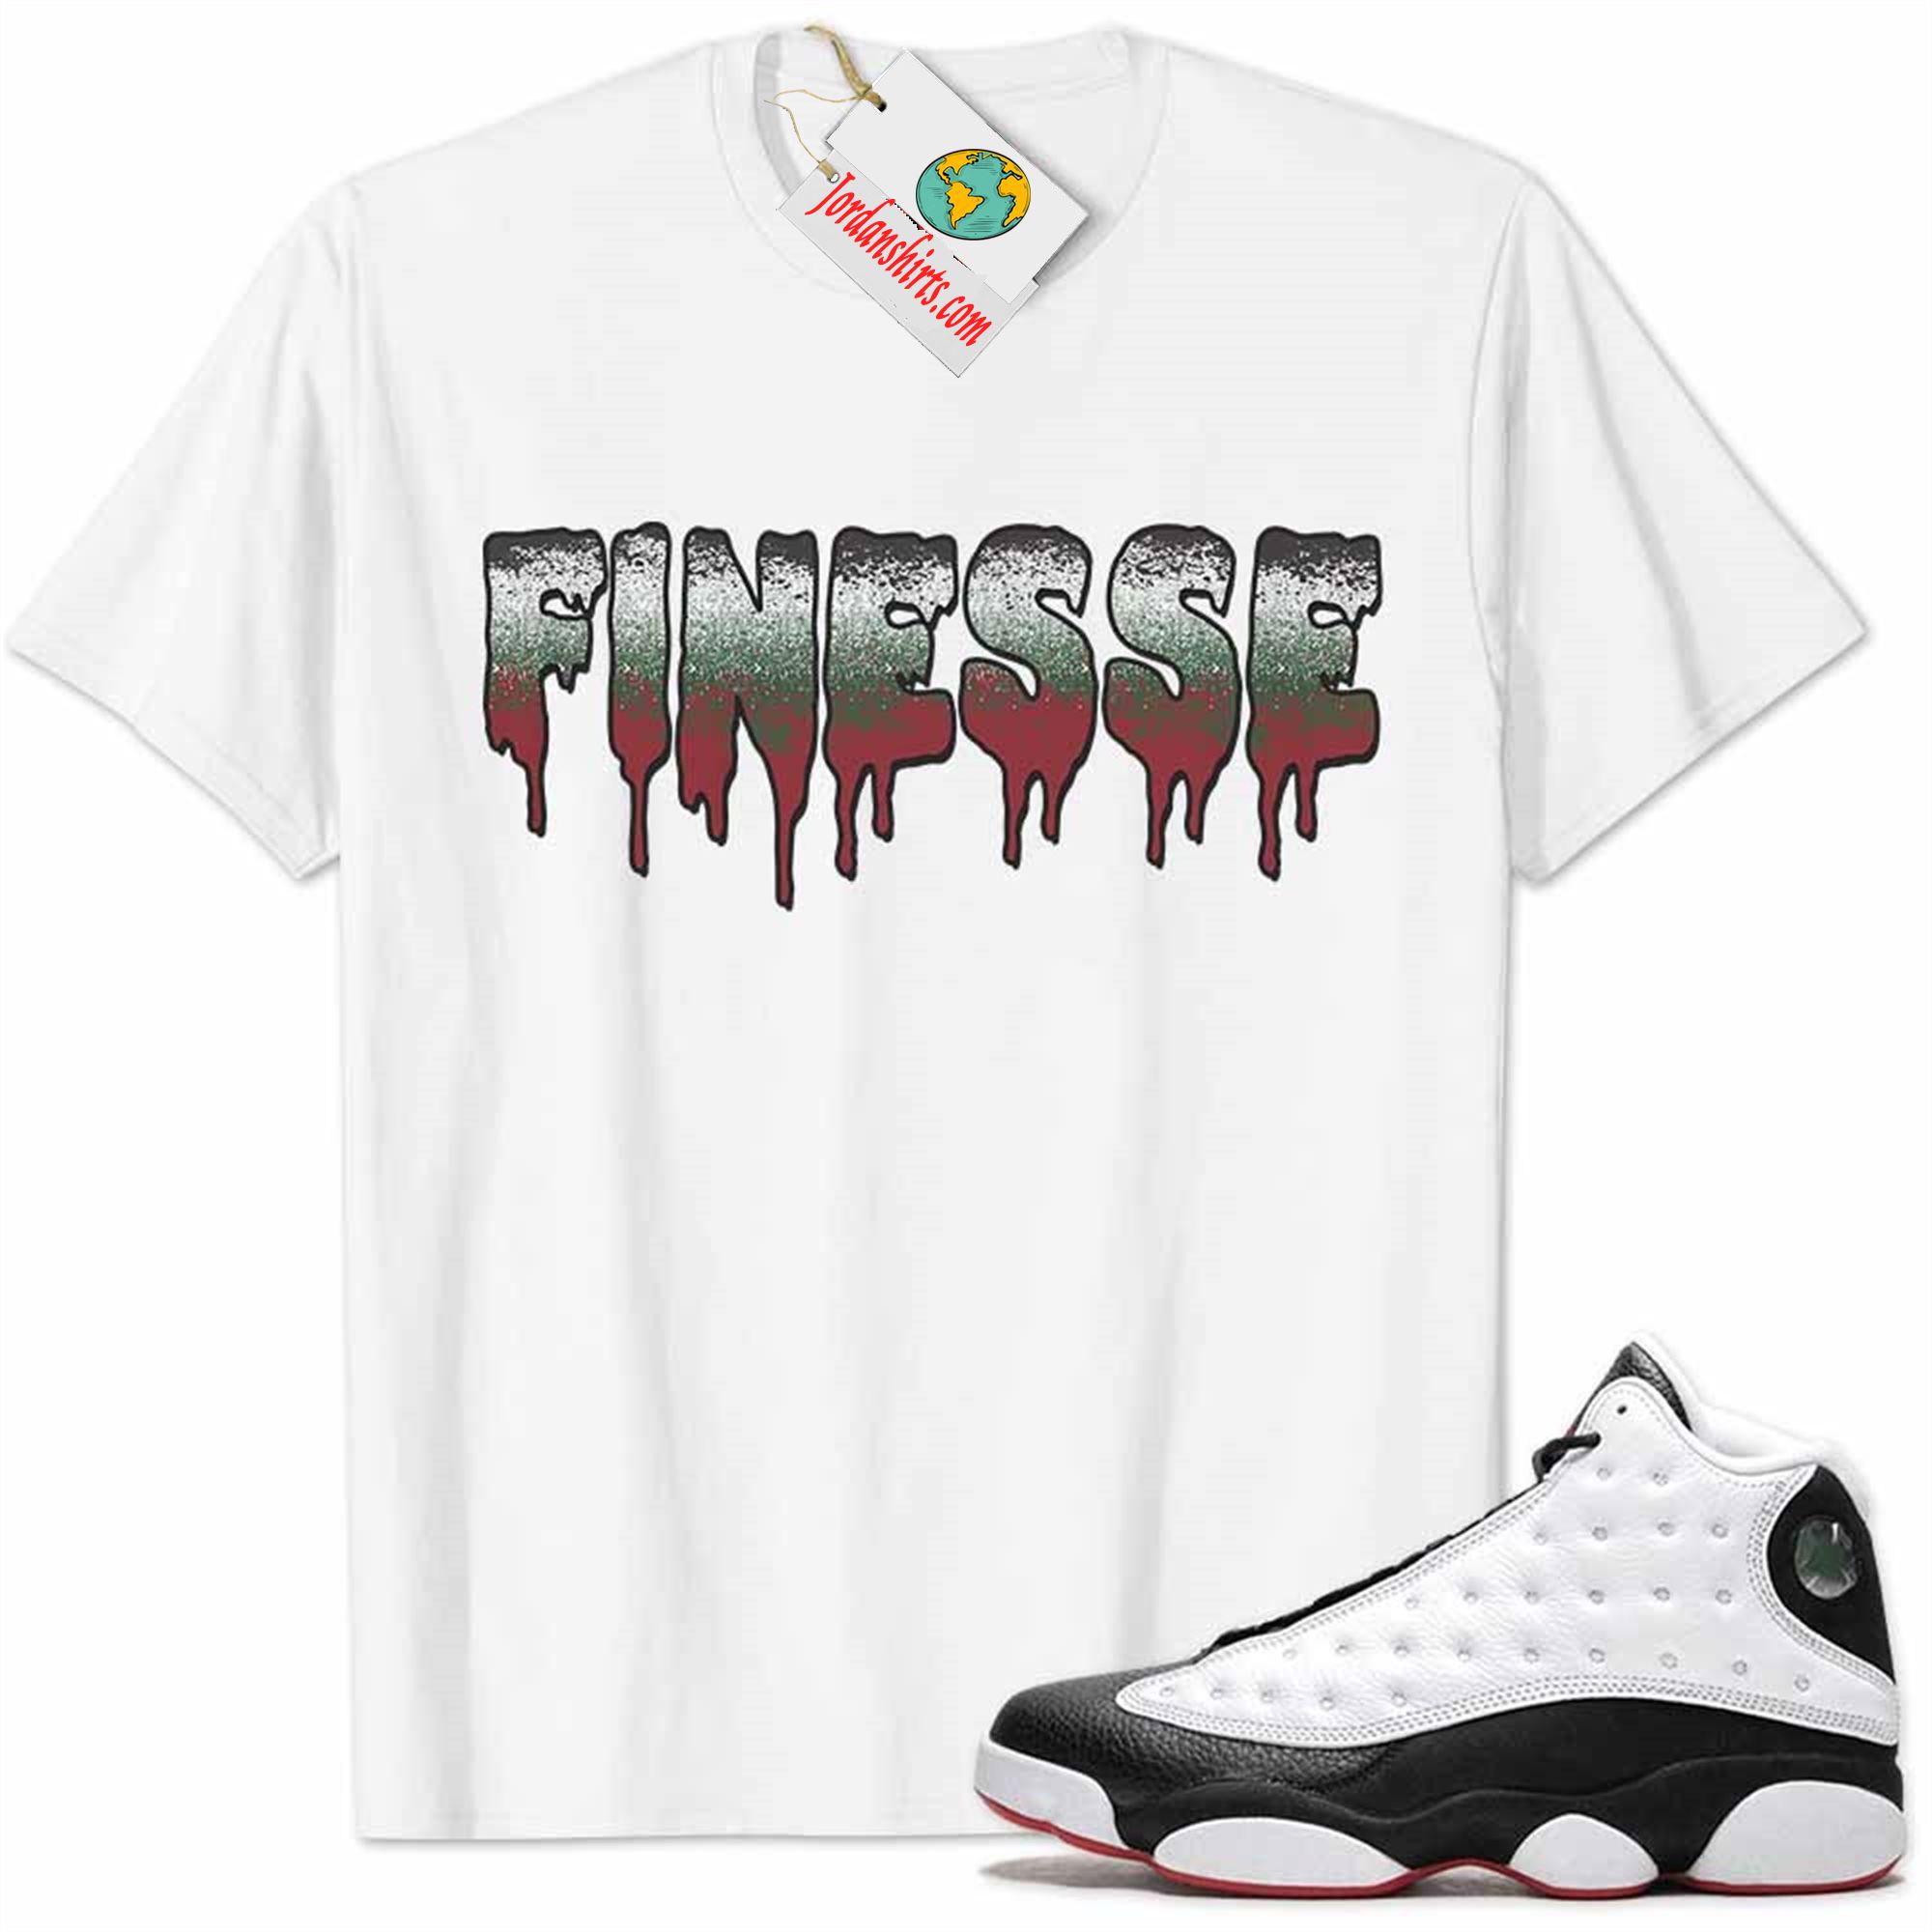 Jordan 13 Shirt, Jordan 13 He Got Game Shirt Finesse Drip White Full Size Up To 5xl